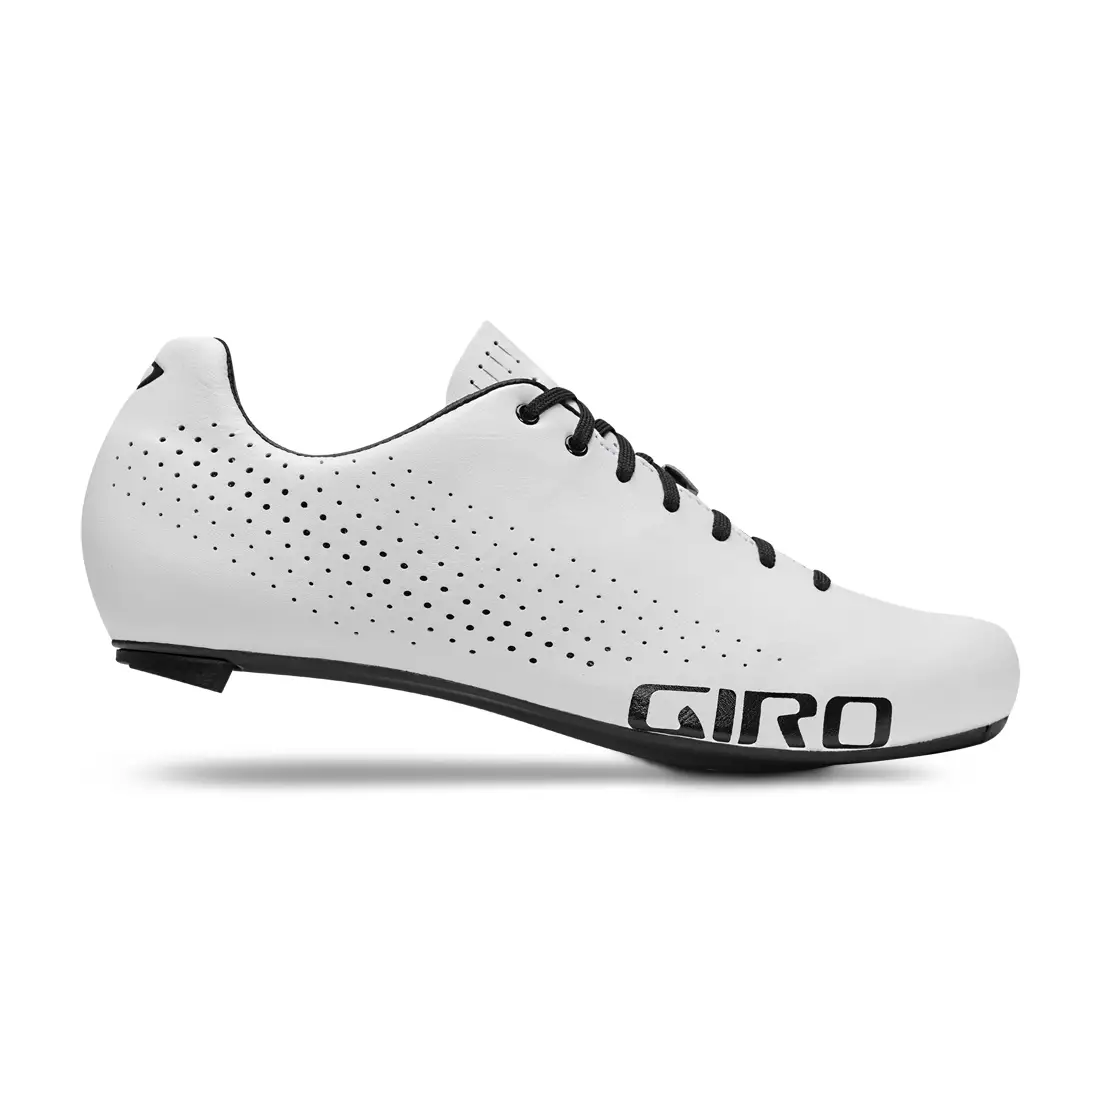 GIRO buty rowerowe męskie EMPIRE white GR-7110759